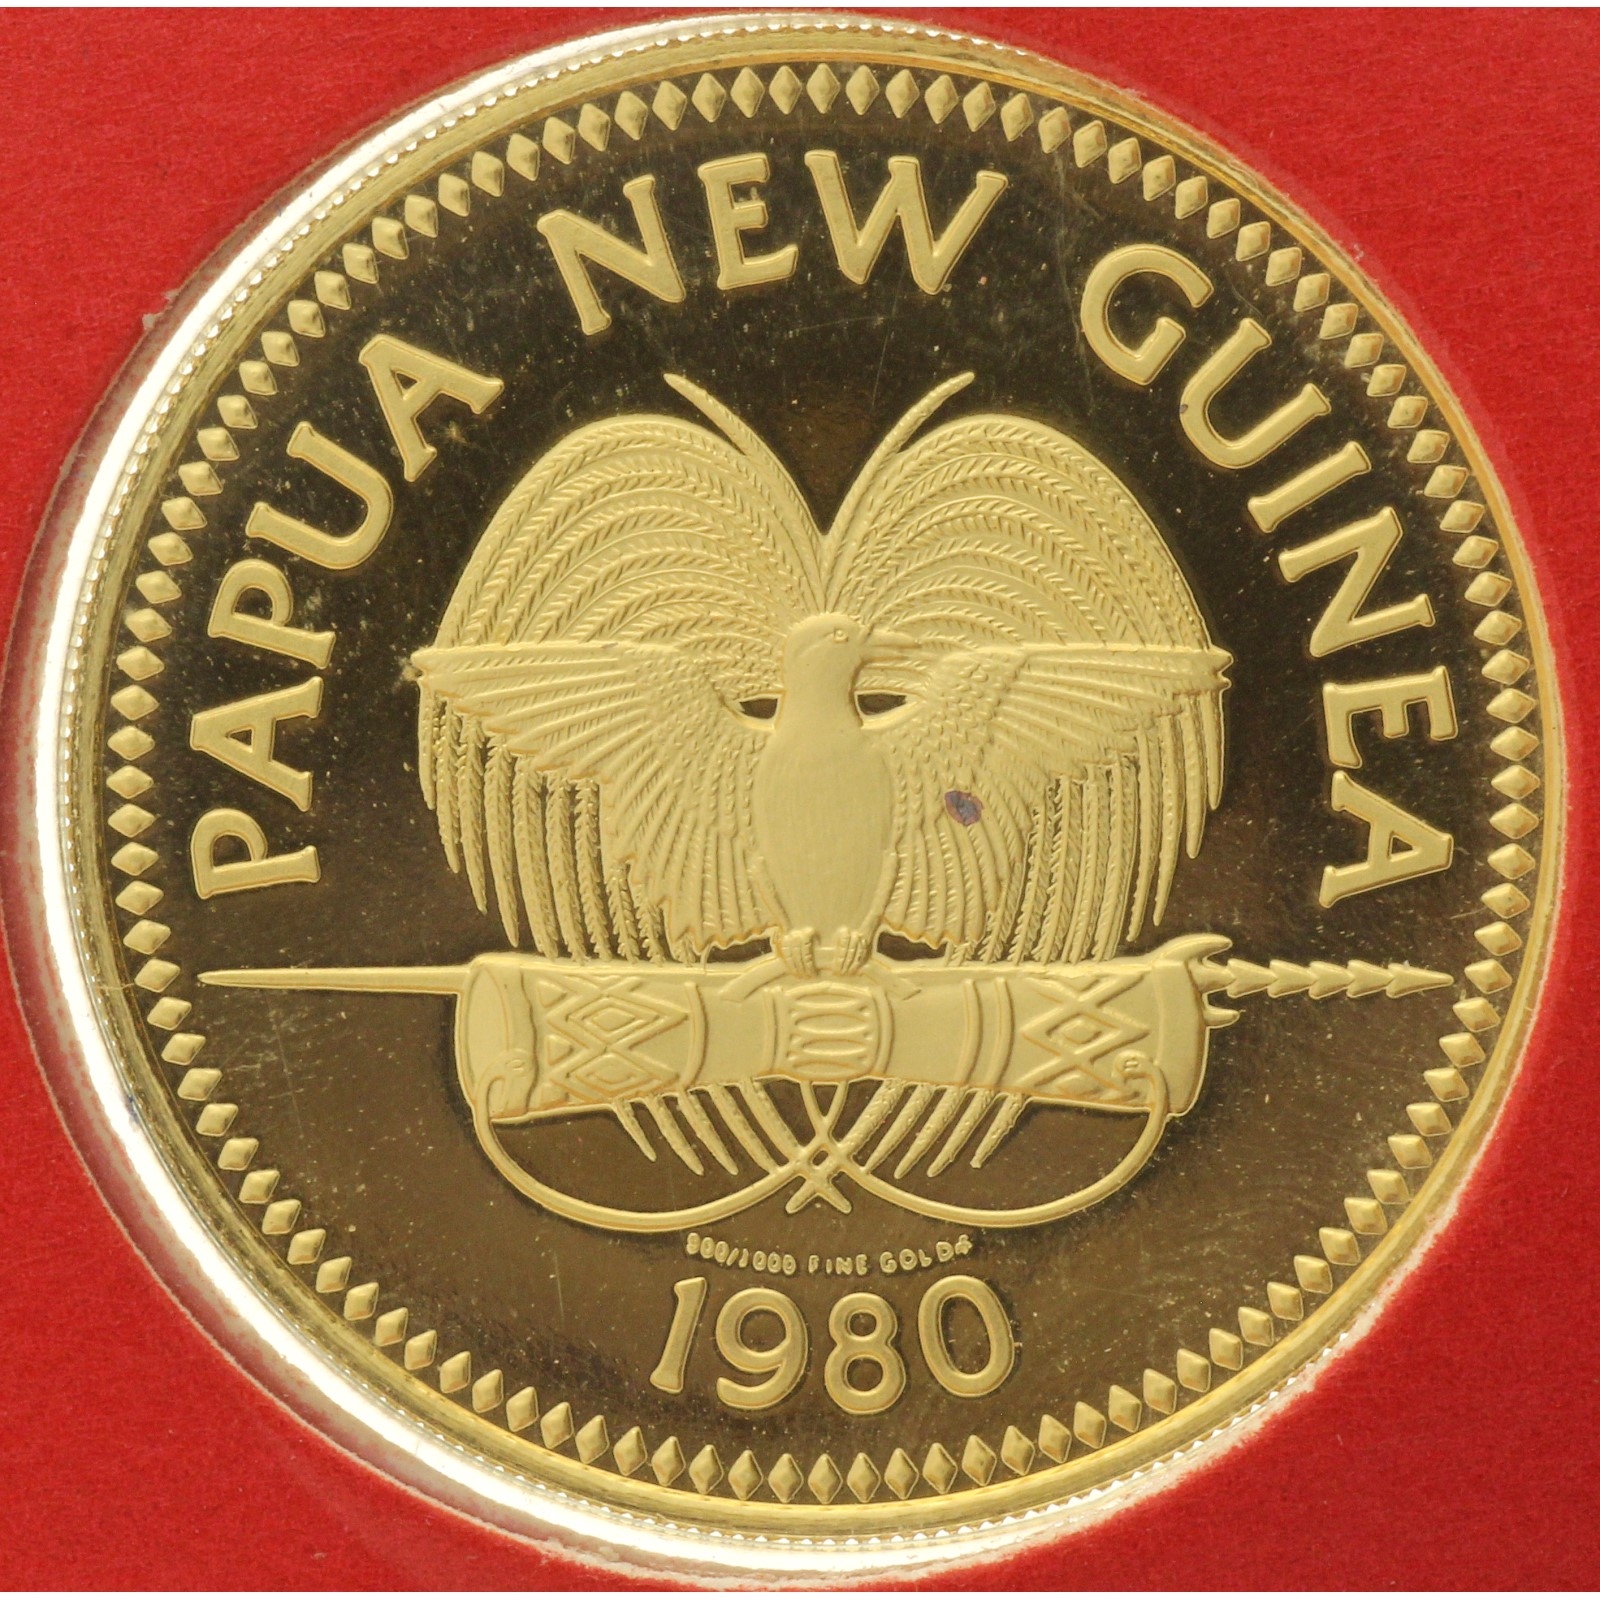 Papua New Guinea - 100 Kina - 1980 - Elizabeth II - 5th Anniversary of Independence